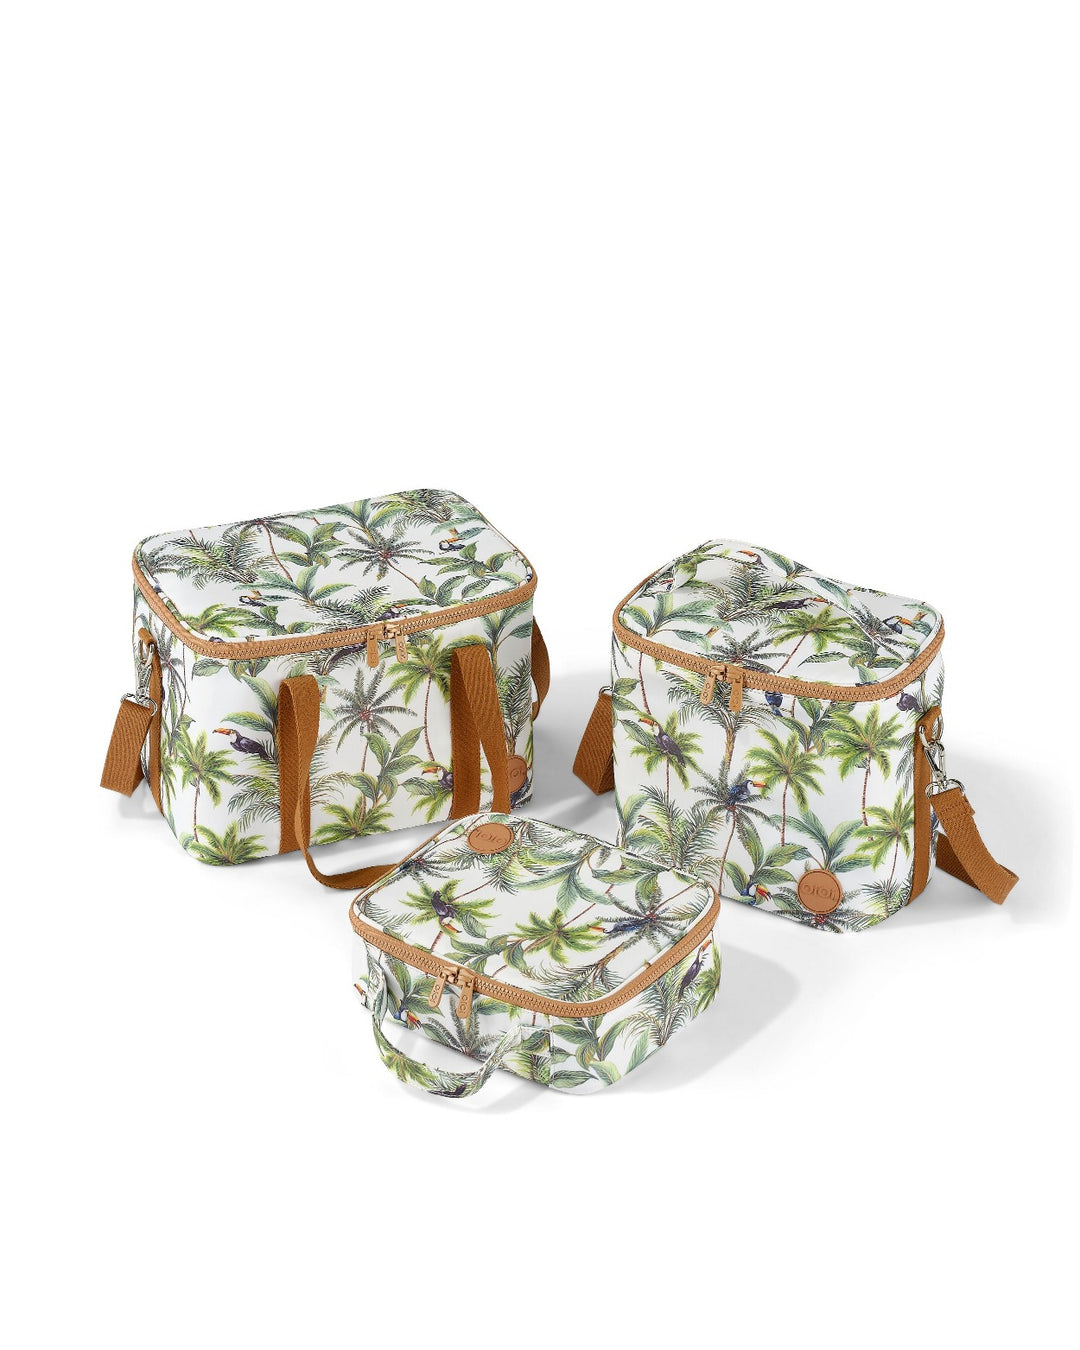 OiOi MINI Insulated Lunch Bag - Tropical